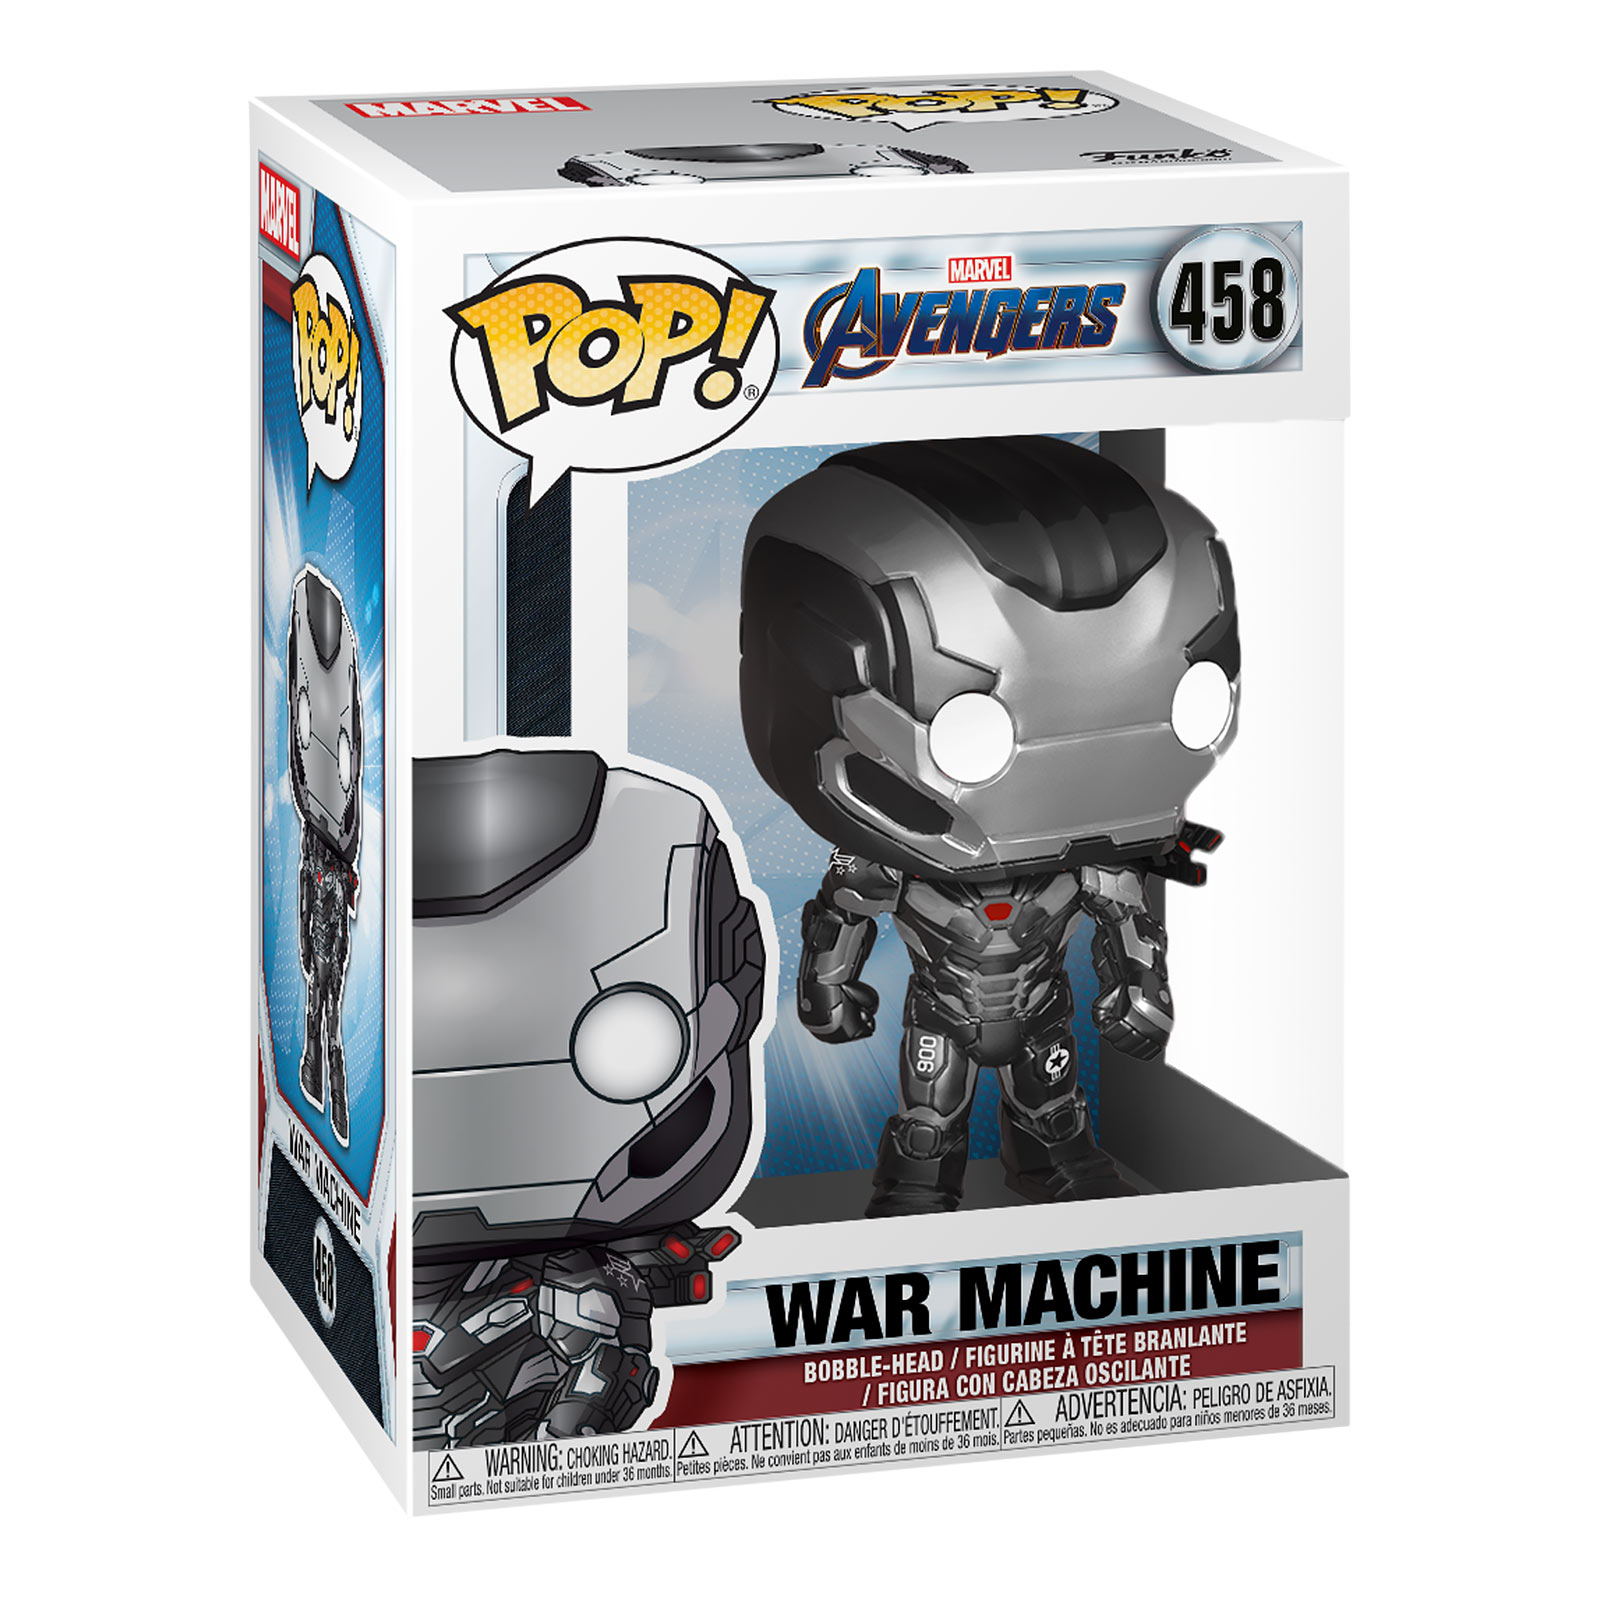 Avengers - War Machine Endgame Funko Pop bobblehead figure